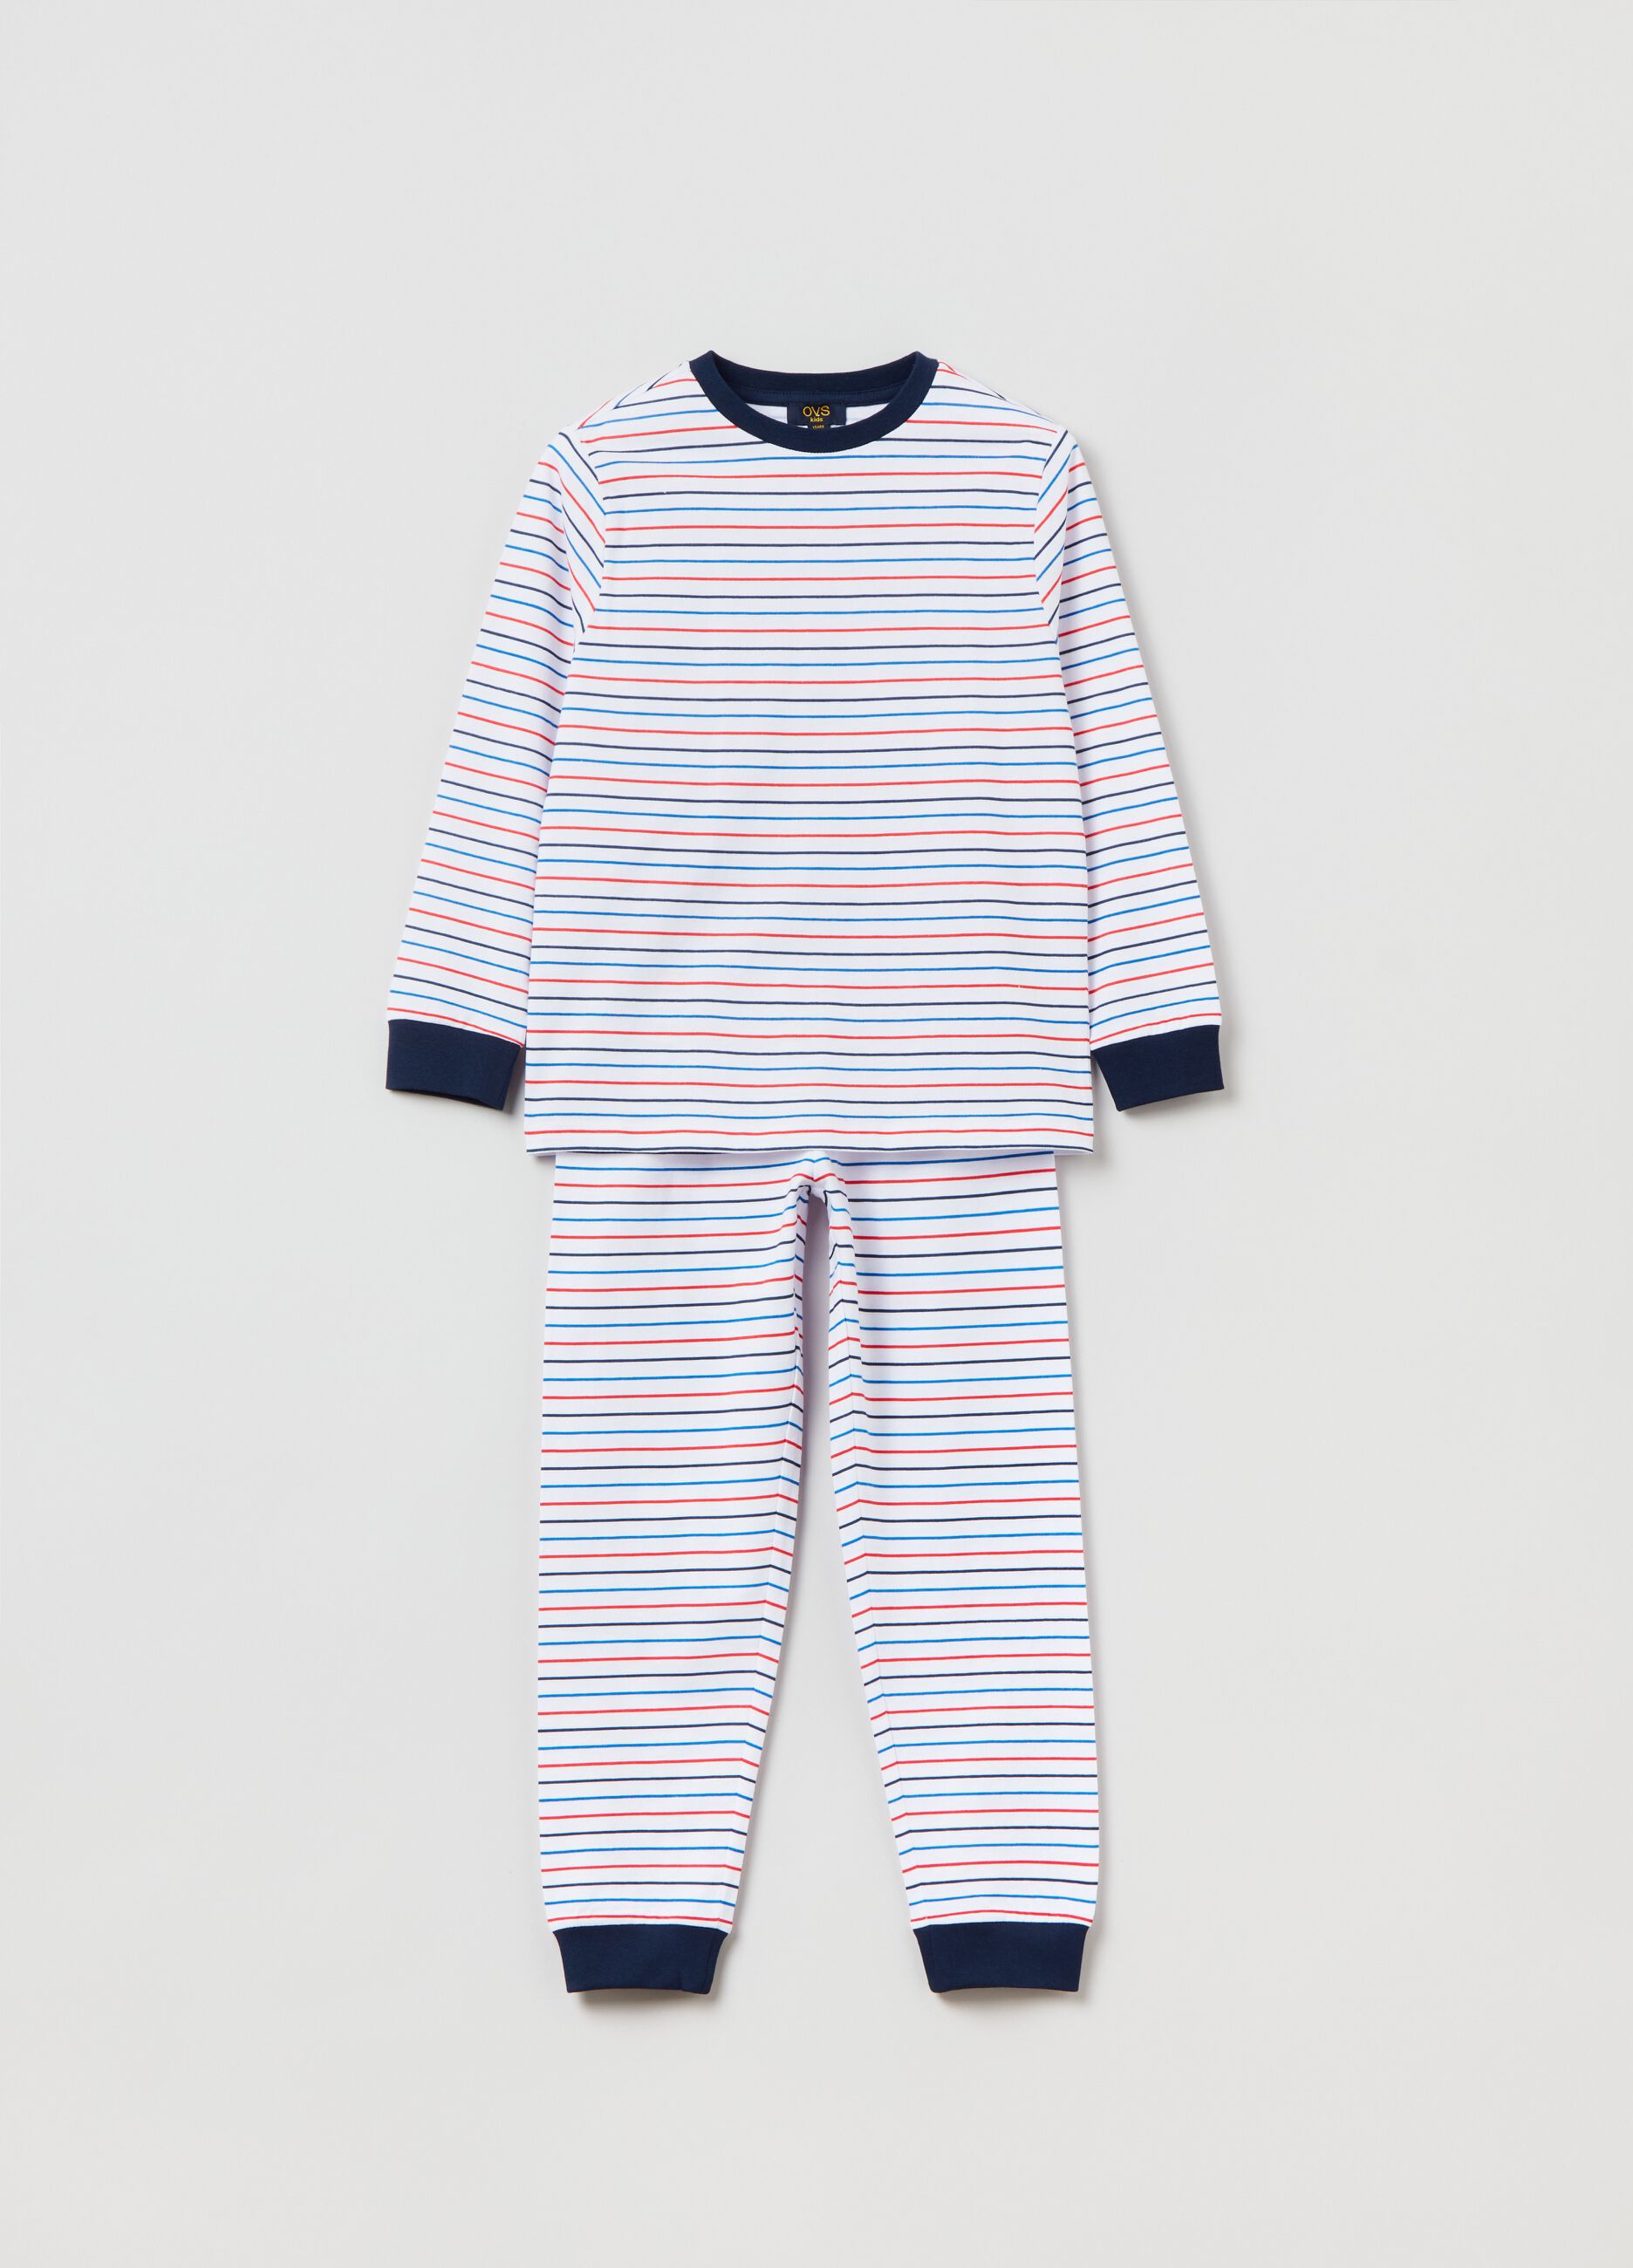 Long cotton pyjamas with striped pattern